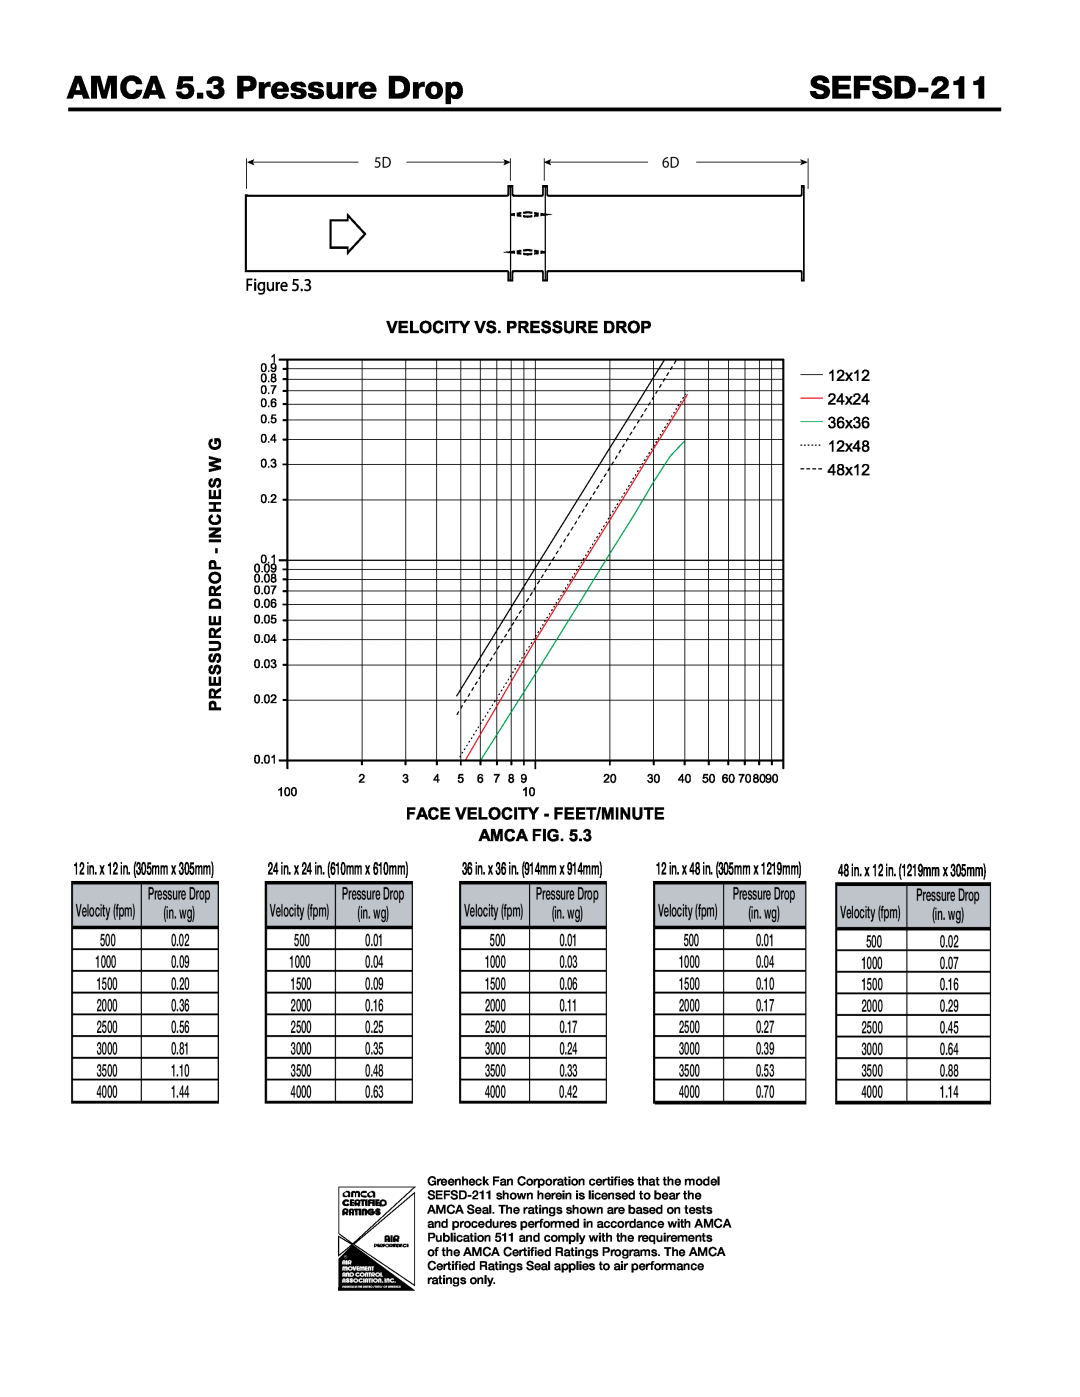 Greenheck Fan SEFSD-211 dimensions AMCA 5.3 Pressure Drop 